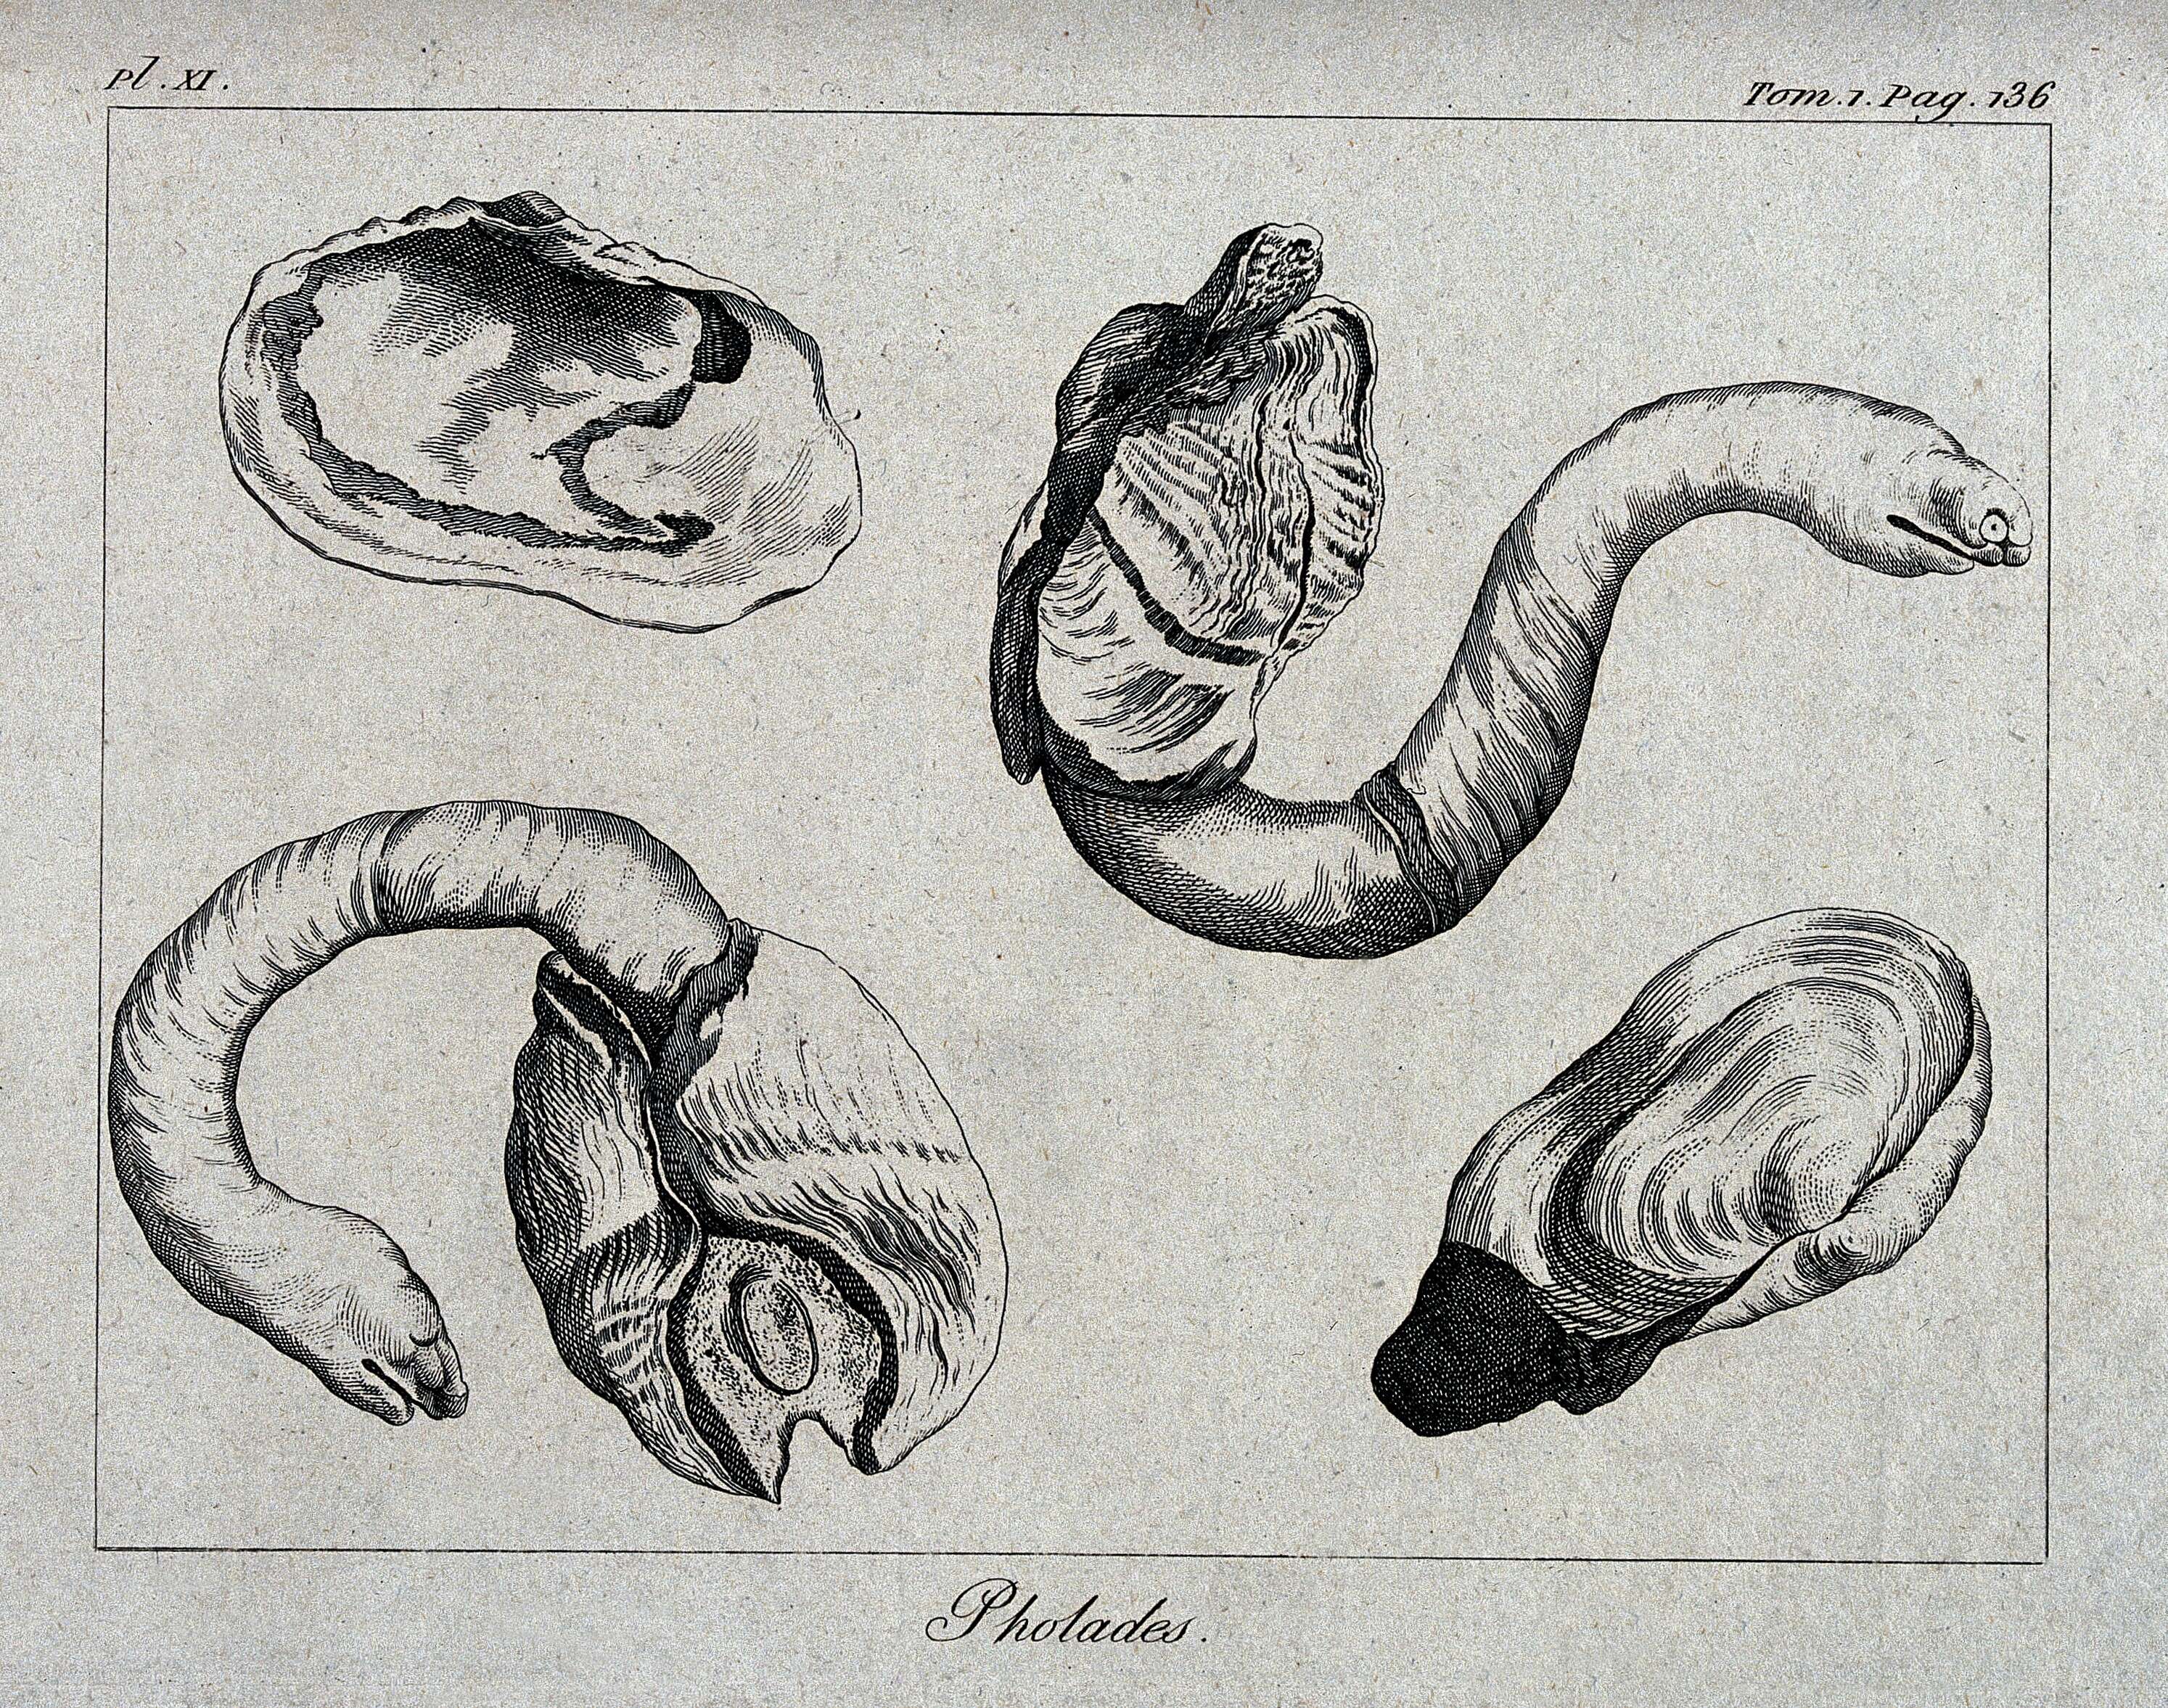 Image of Pholadidae Lamarck 1809